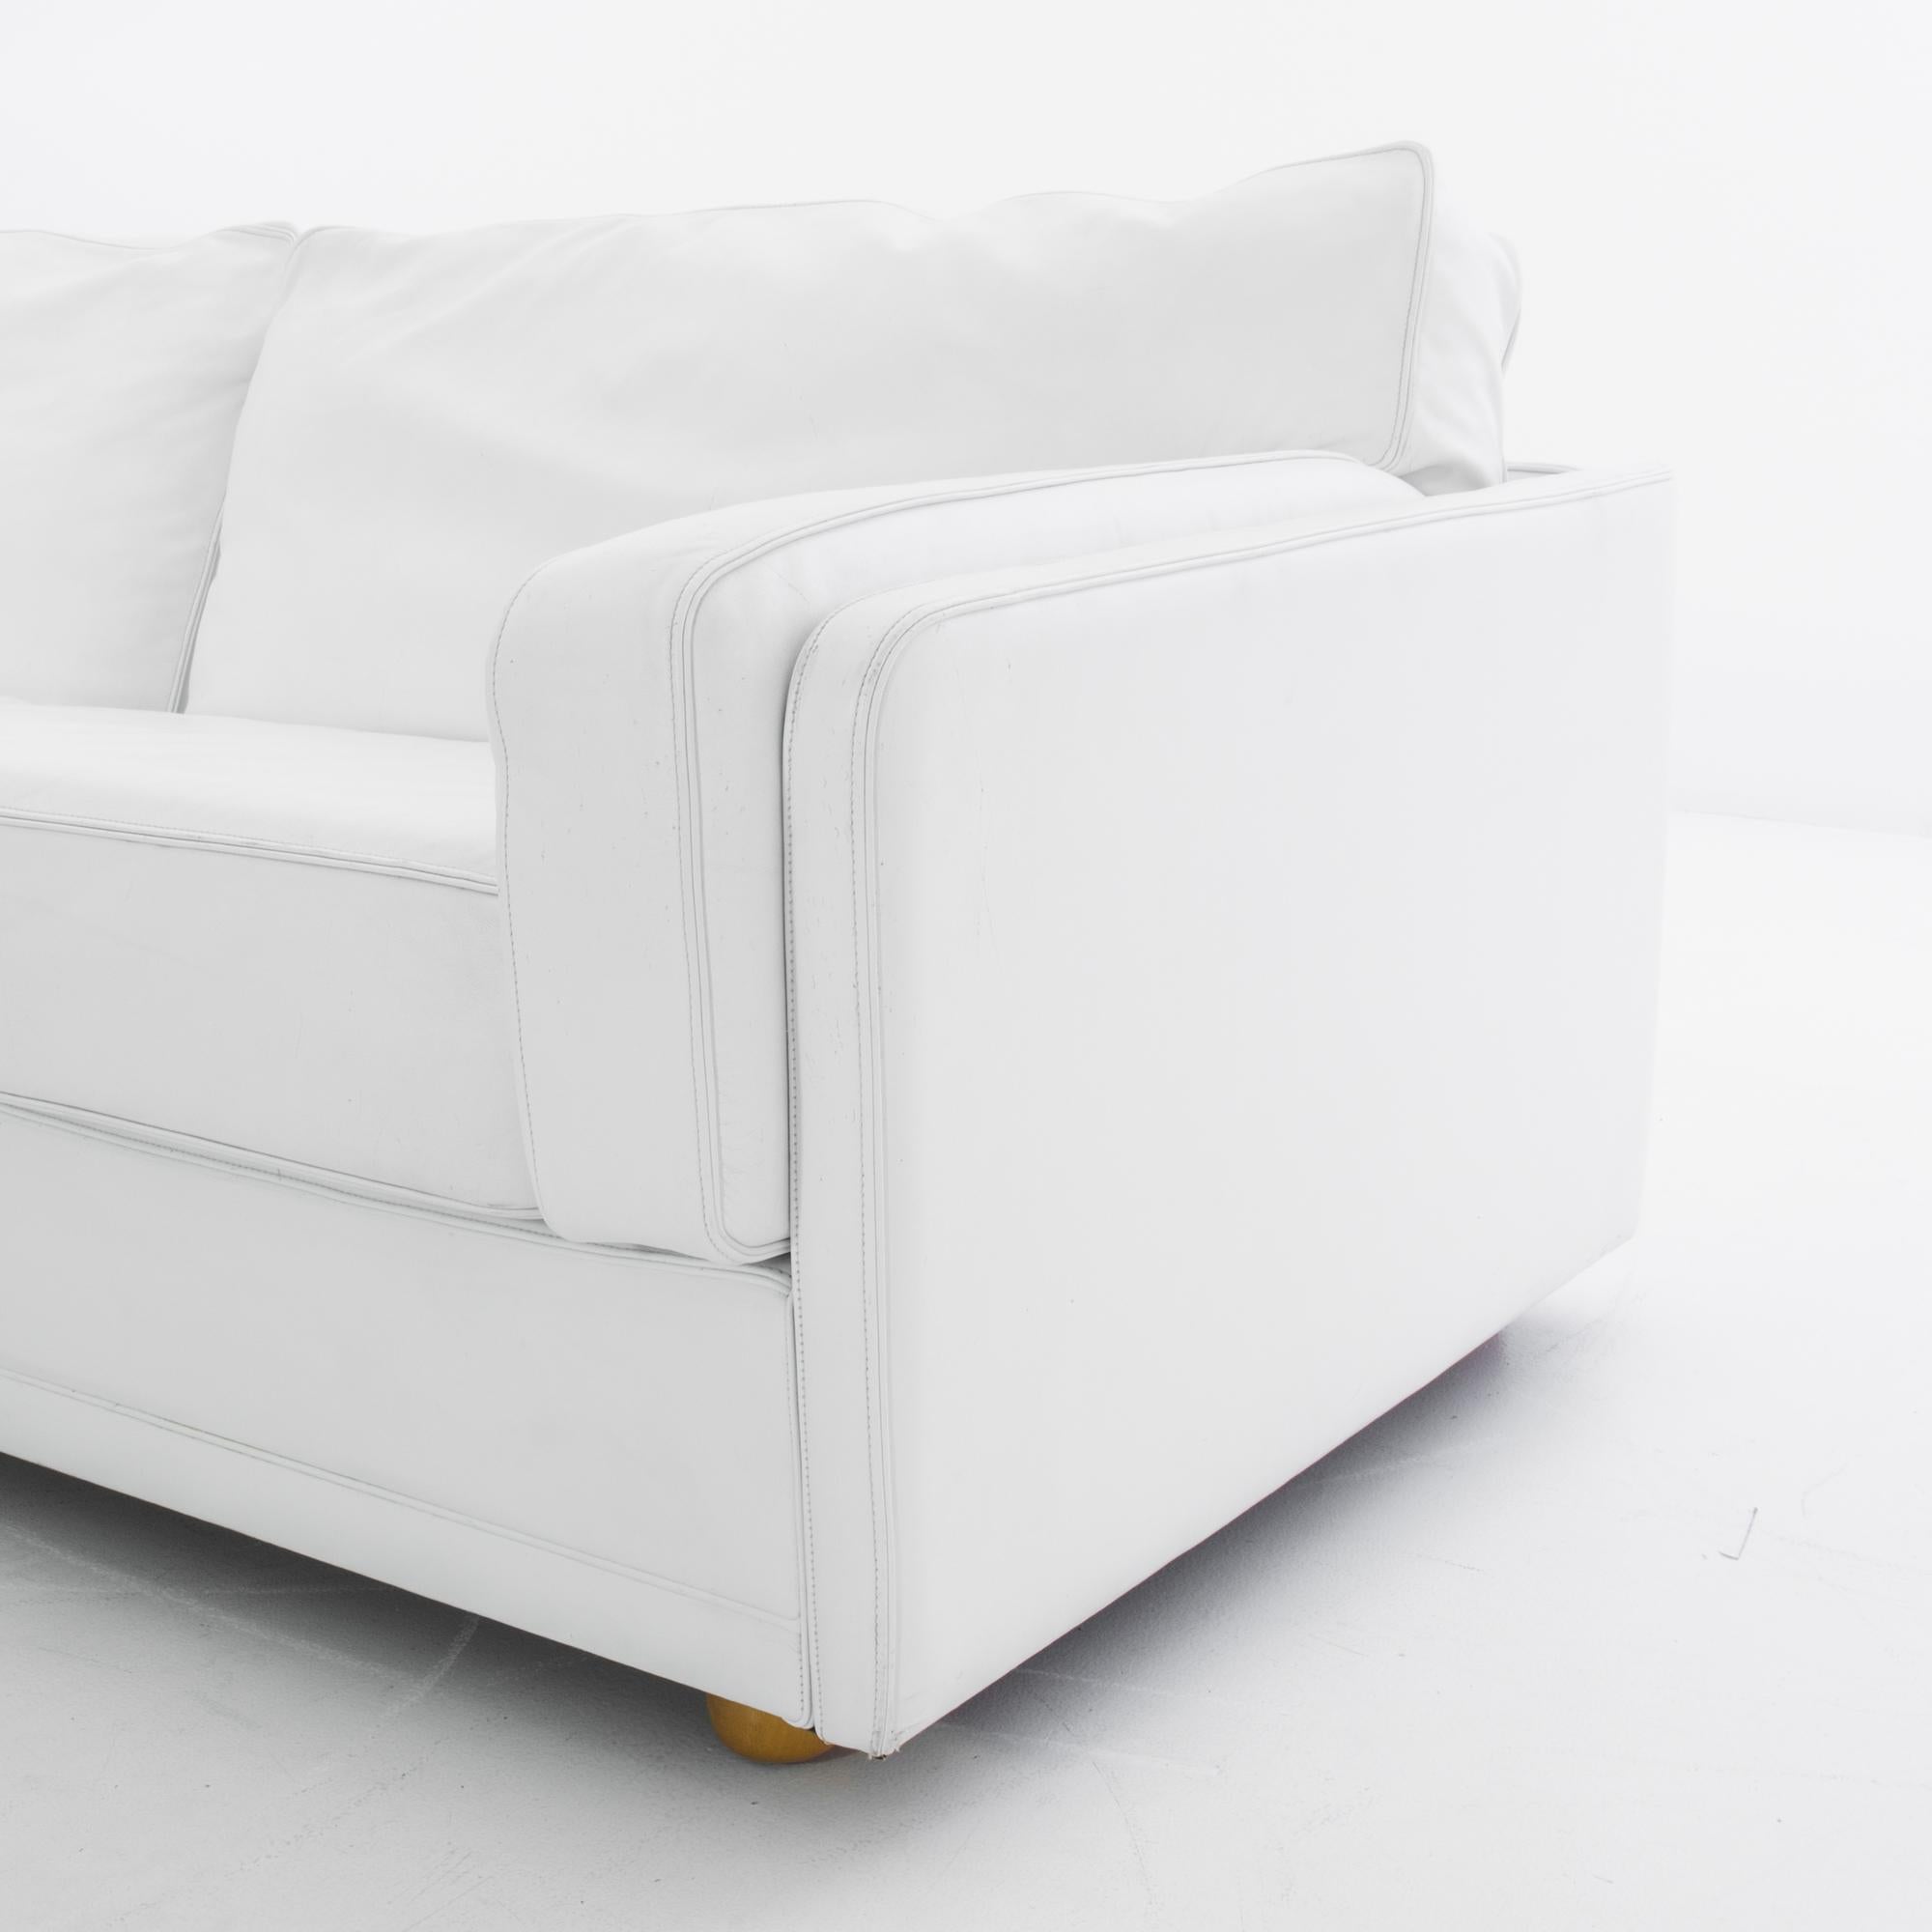 1980s Poltrona Frau White Leather Sofa  For Sale 1